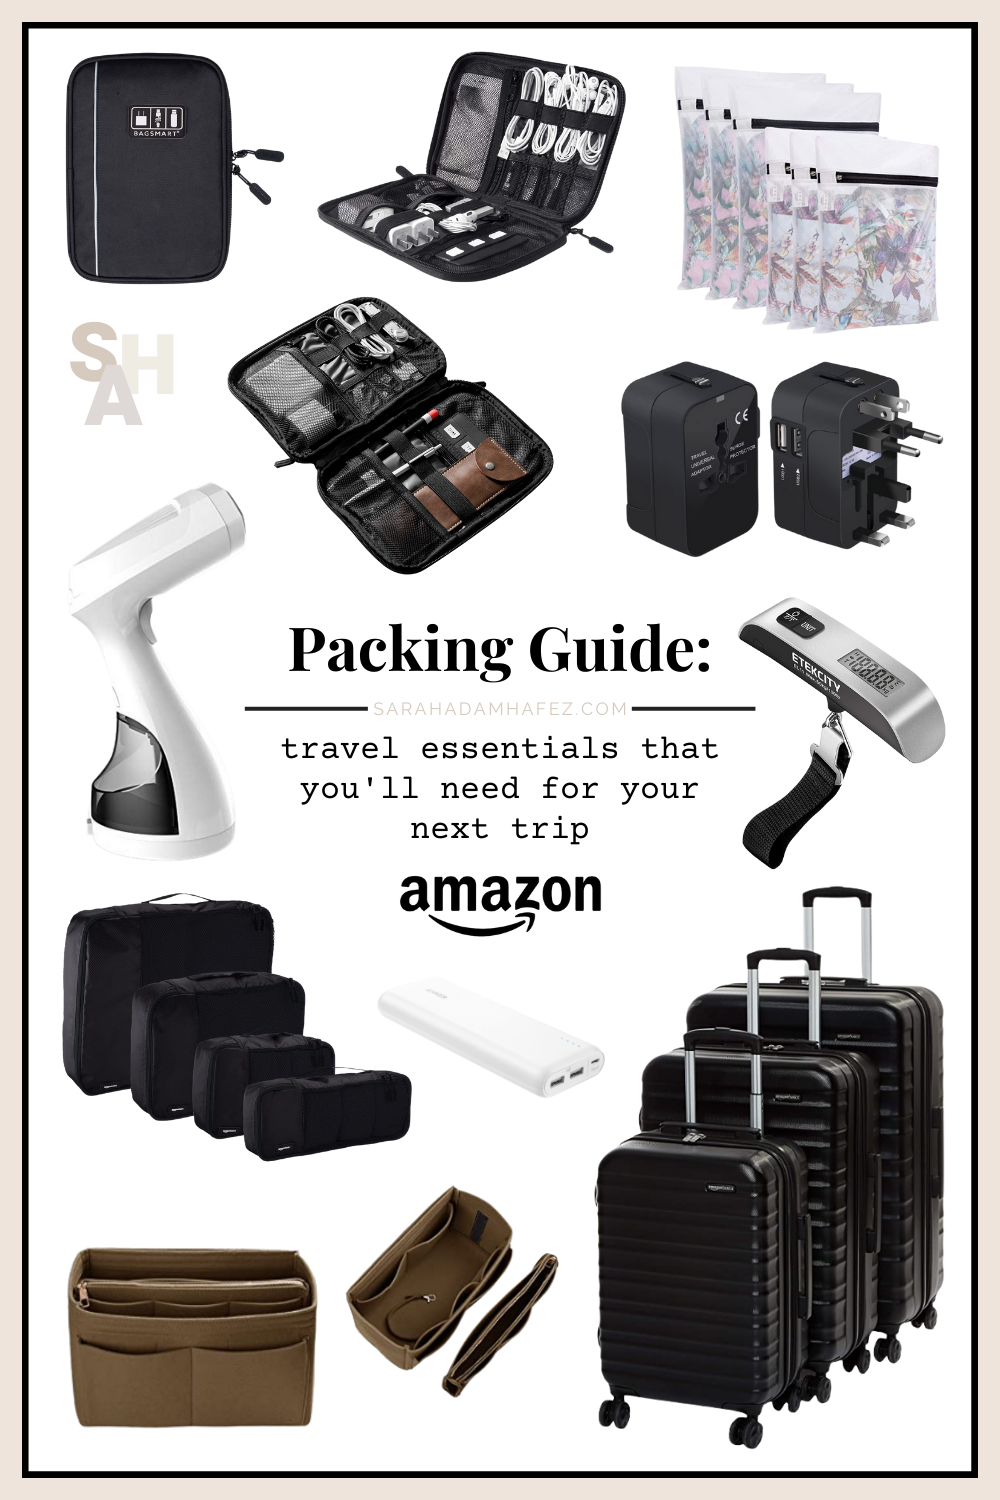 amazon travel bag reviews